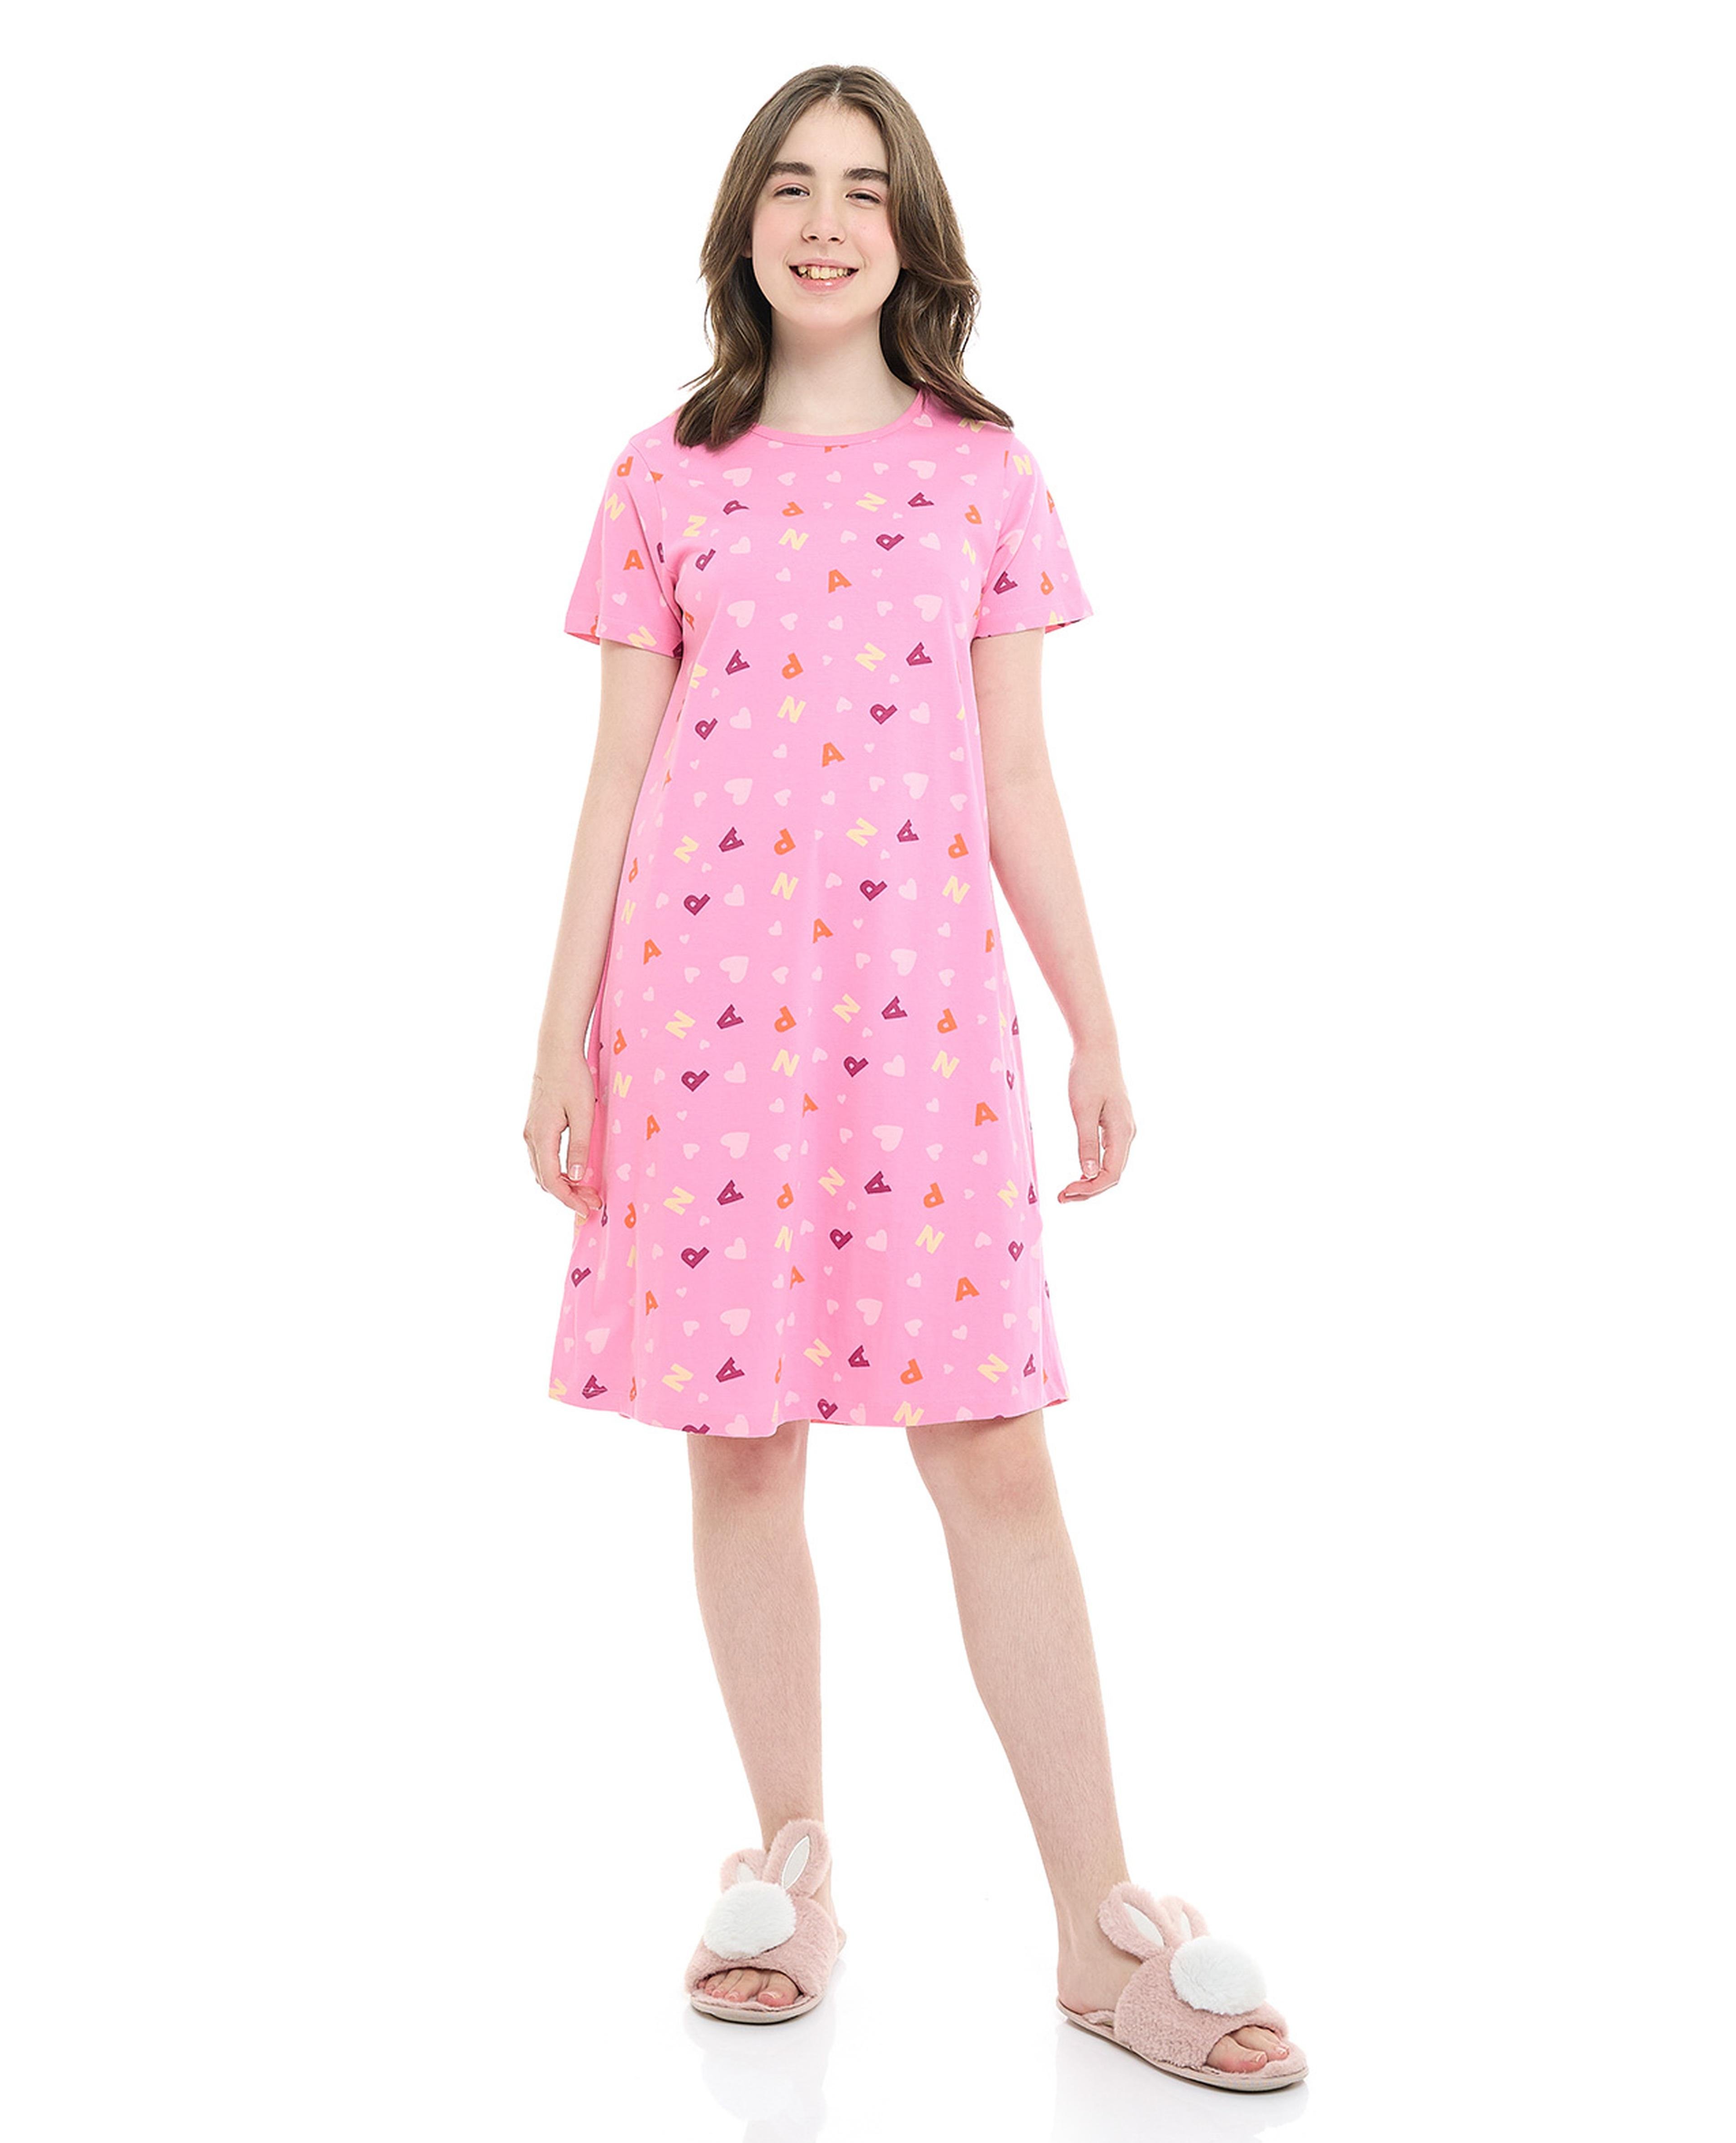 Buy Girls Nightwear Dresses | Kids Nightwear Online - Rajkumari